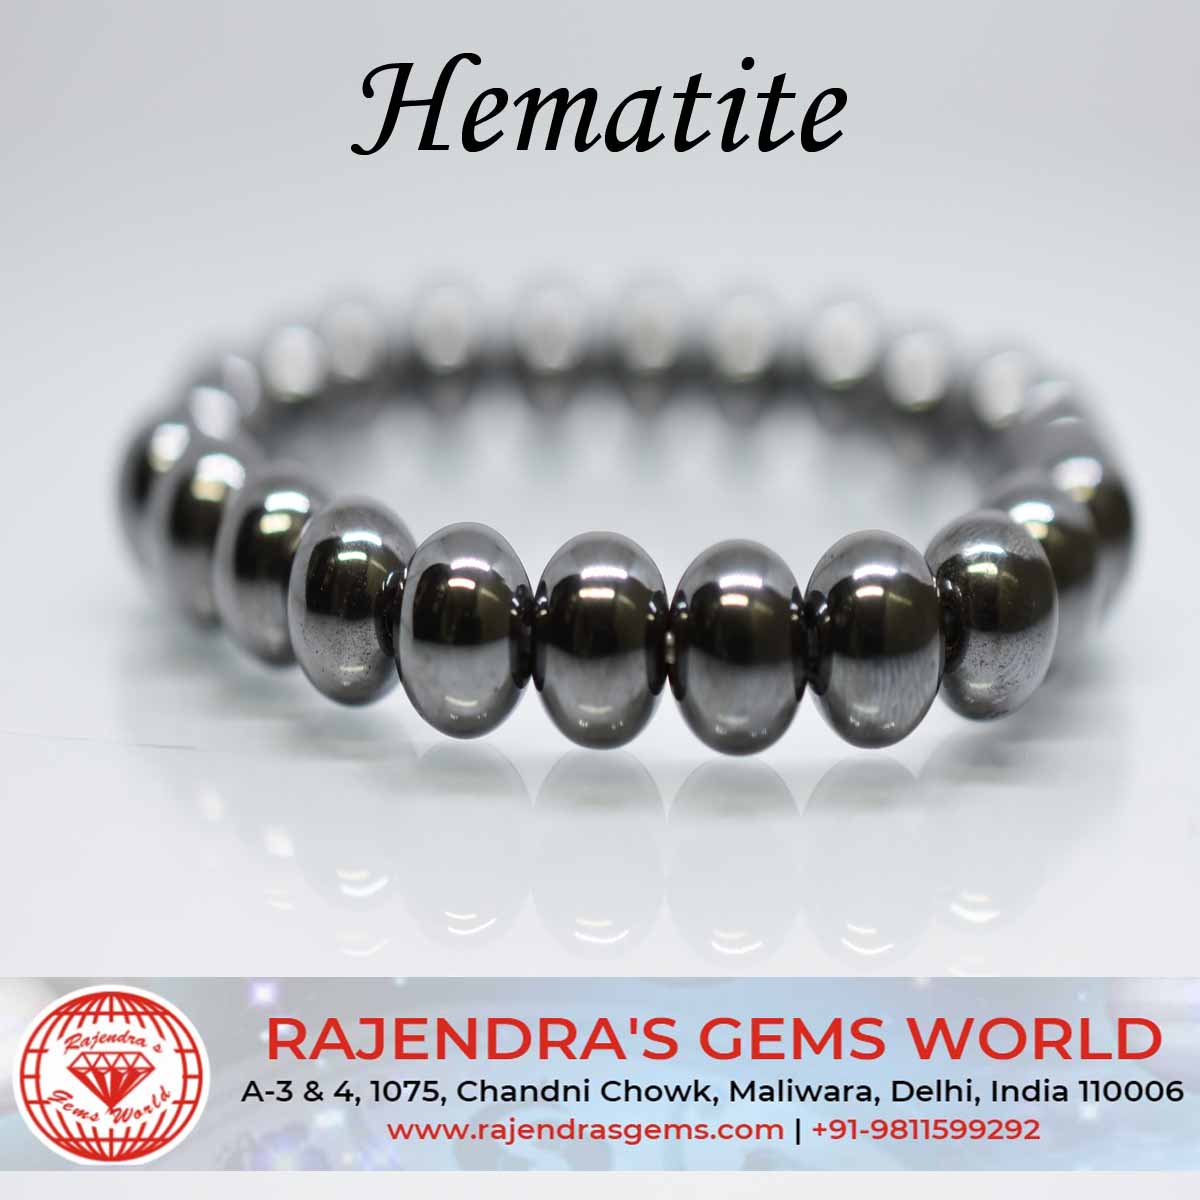 Men's HEMATITE Double Bead Bracelet